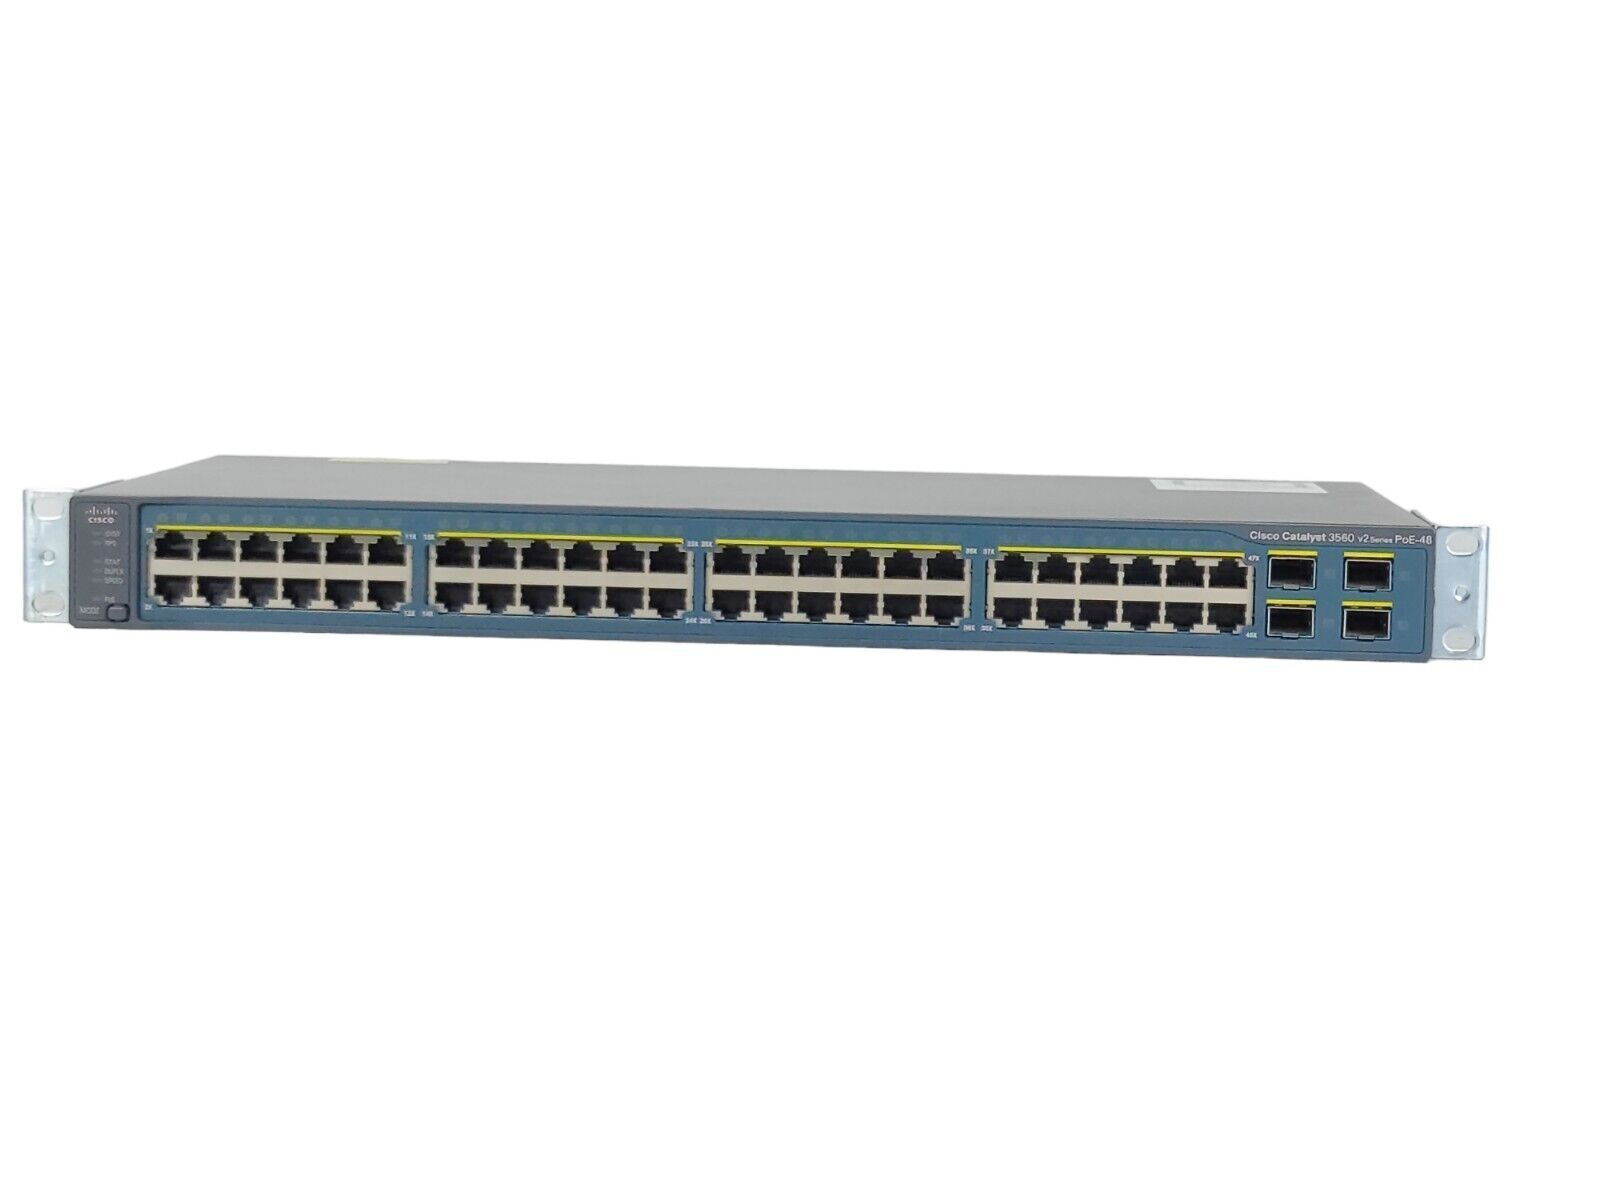 Cisco Catalyst 3560 v2 Series WS-C3560V2-48PS-S 48 Port PoE Switch